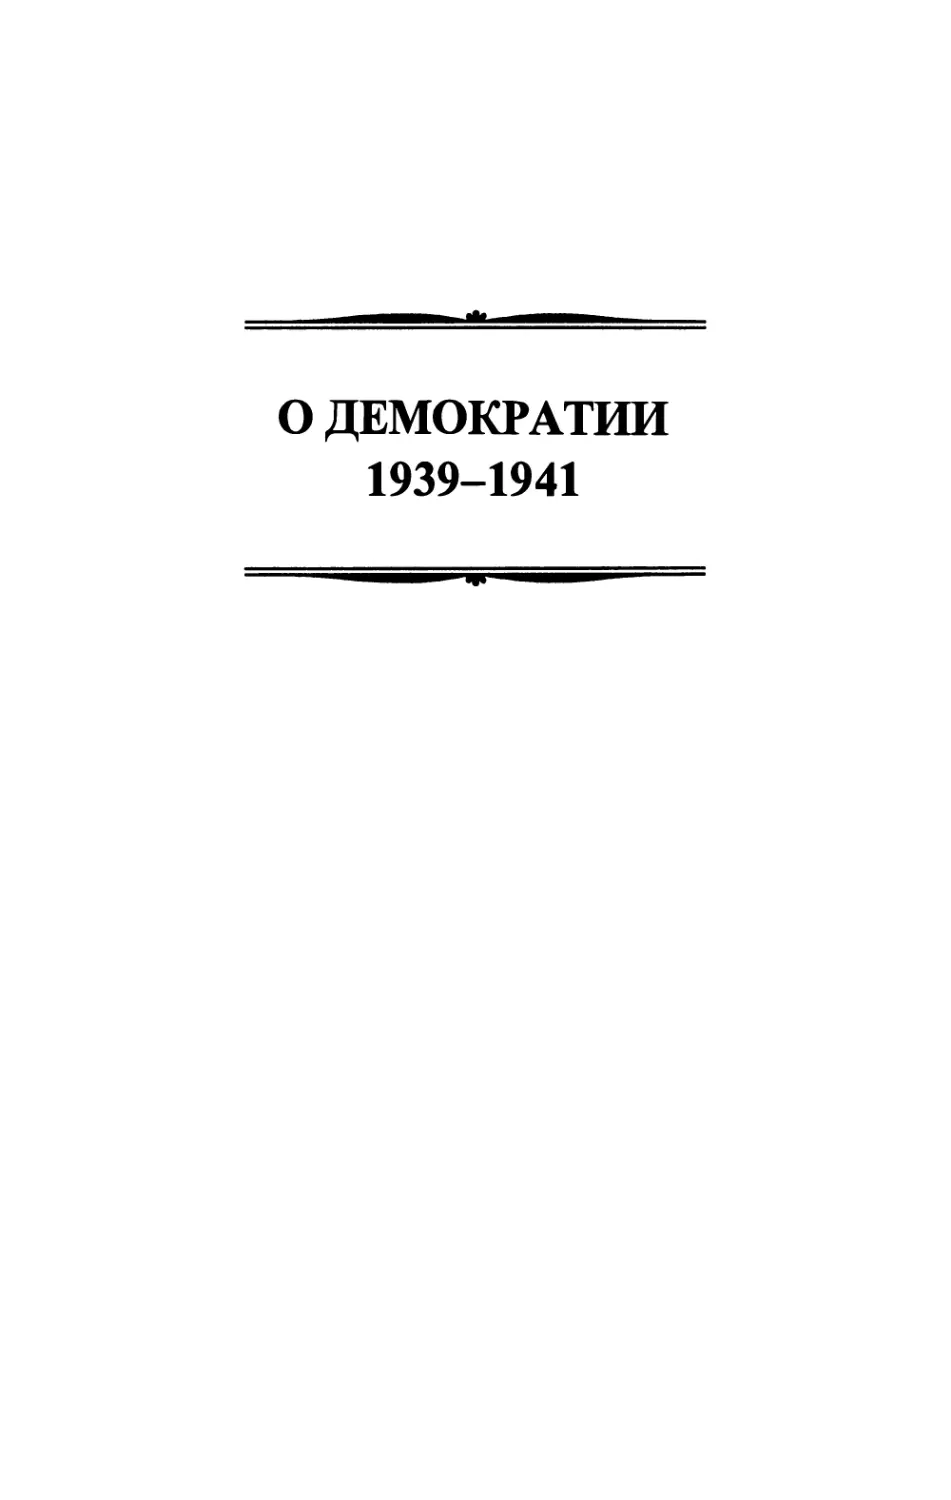 О ДЕМОКРАТИИ 1939-1941